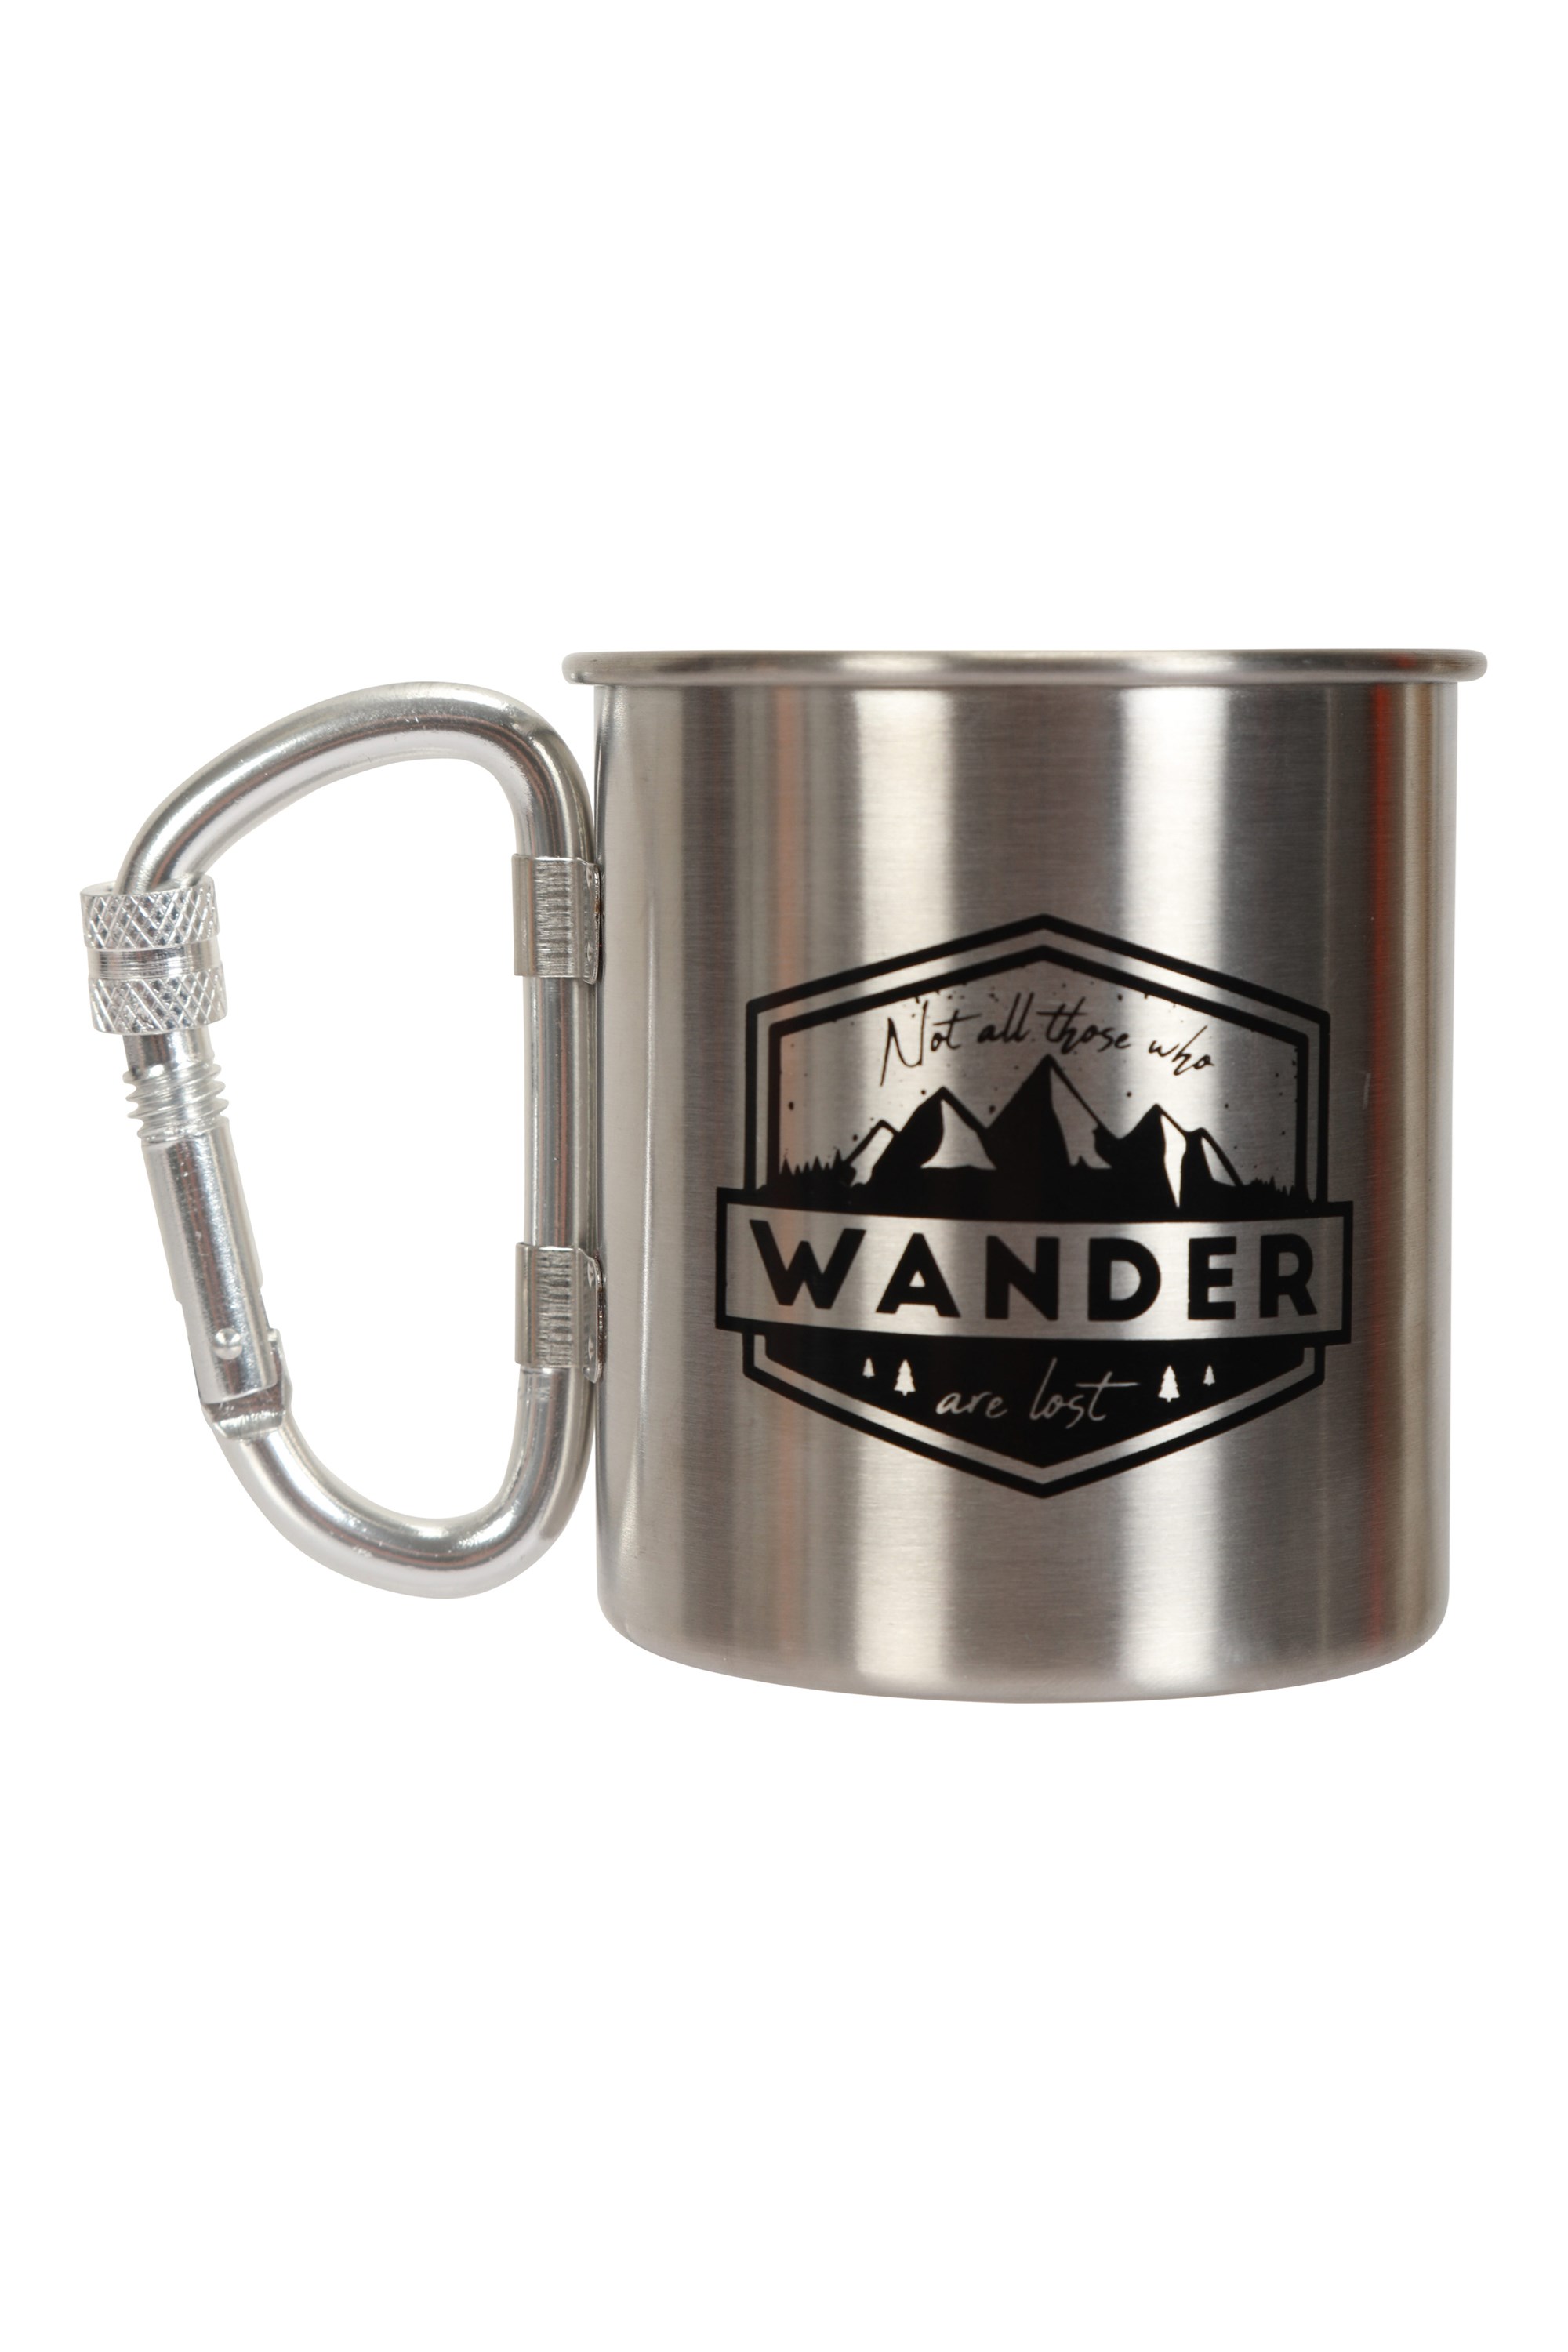 Wander Printed Karabiner Mug - 280ml - Silver